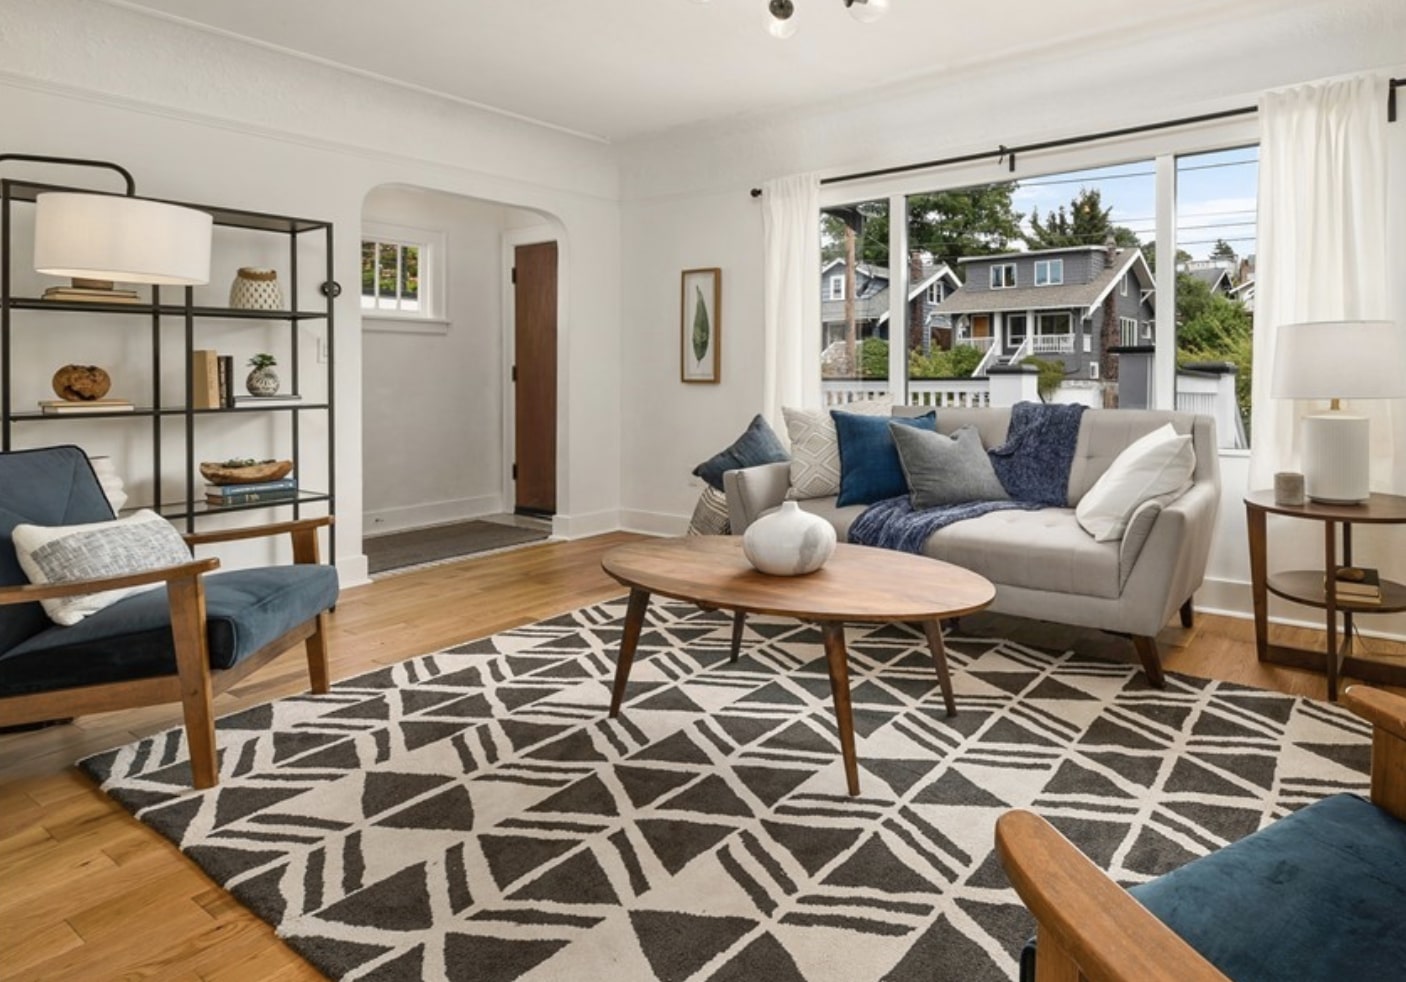 Modern styled living room with original craftsman details